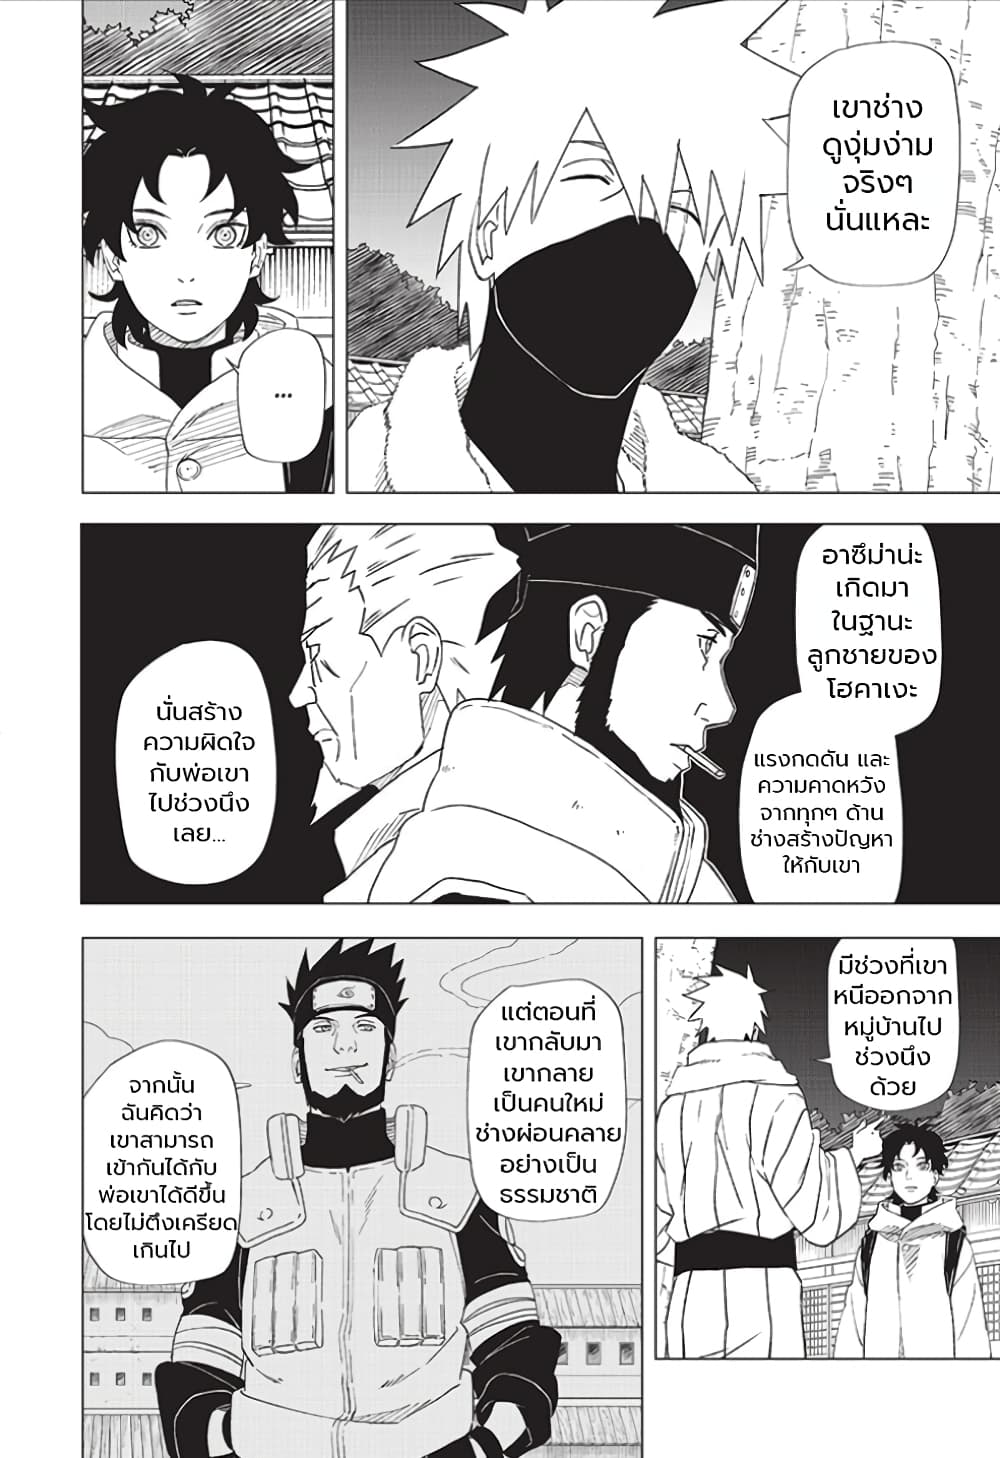 Naruto Konoha’s Story – The Steam Ninja Scrolls The Manga ตอนที่ 4 (8)